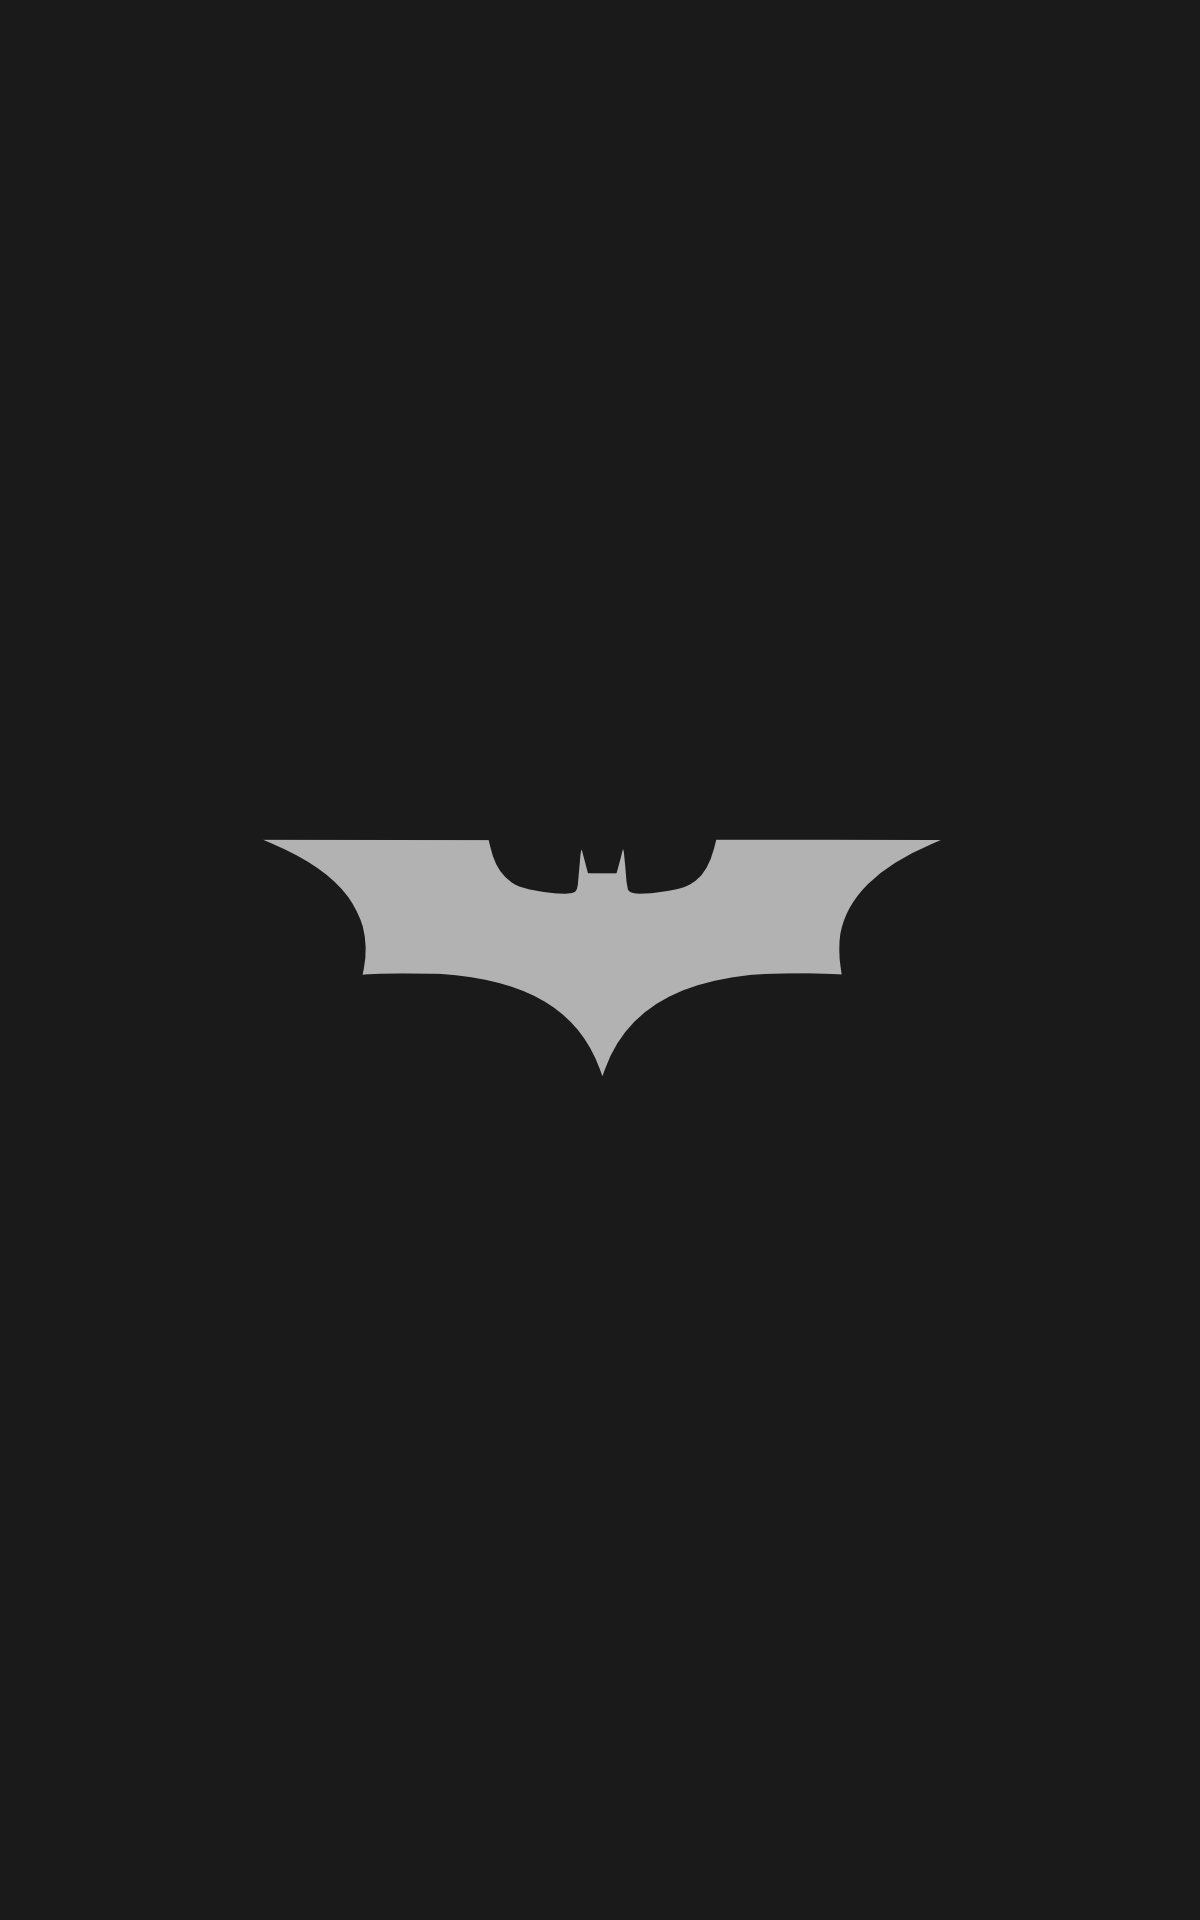 #portrait display, #Batman logo, #Batman, #minimalism